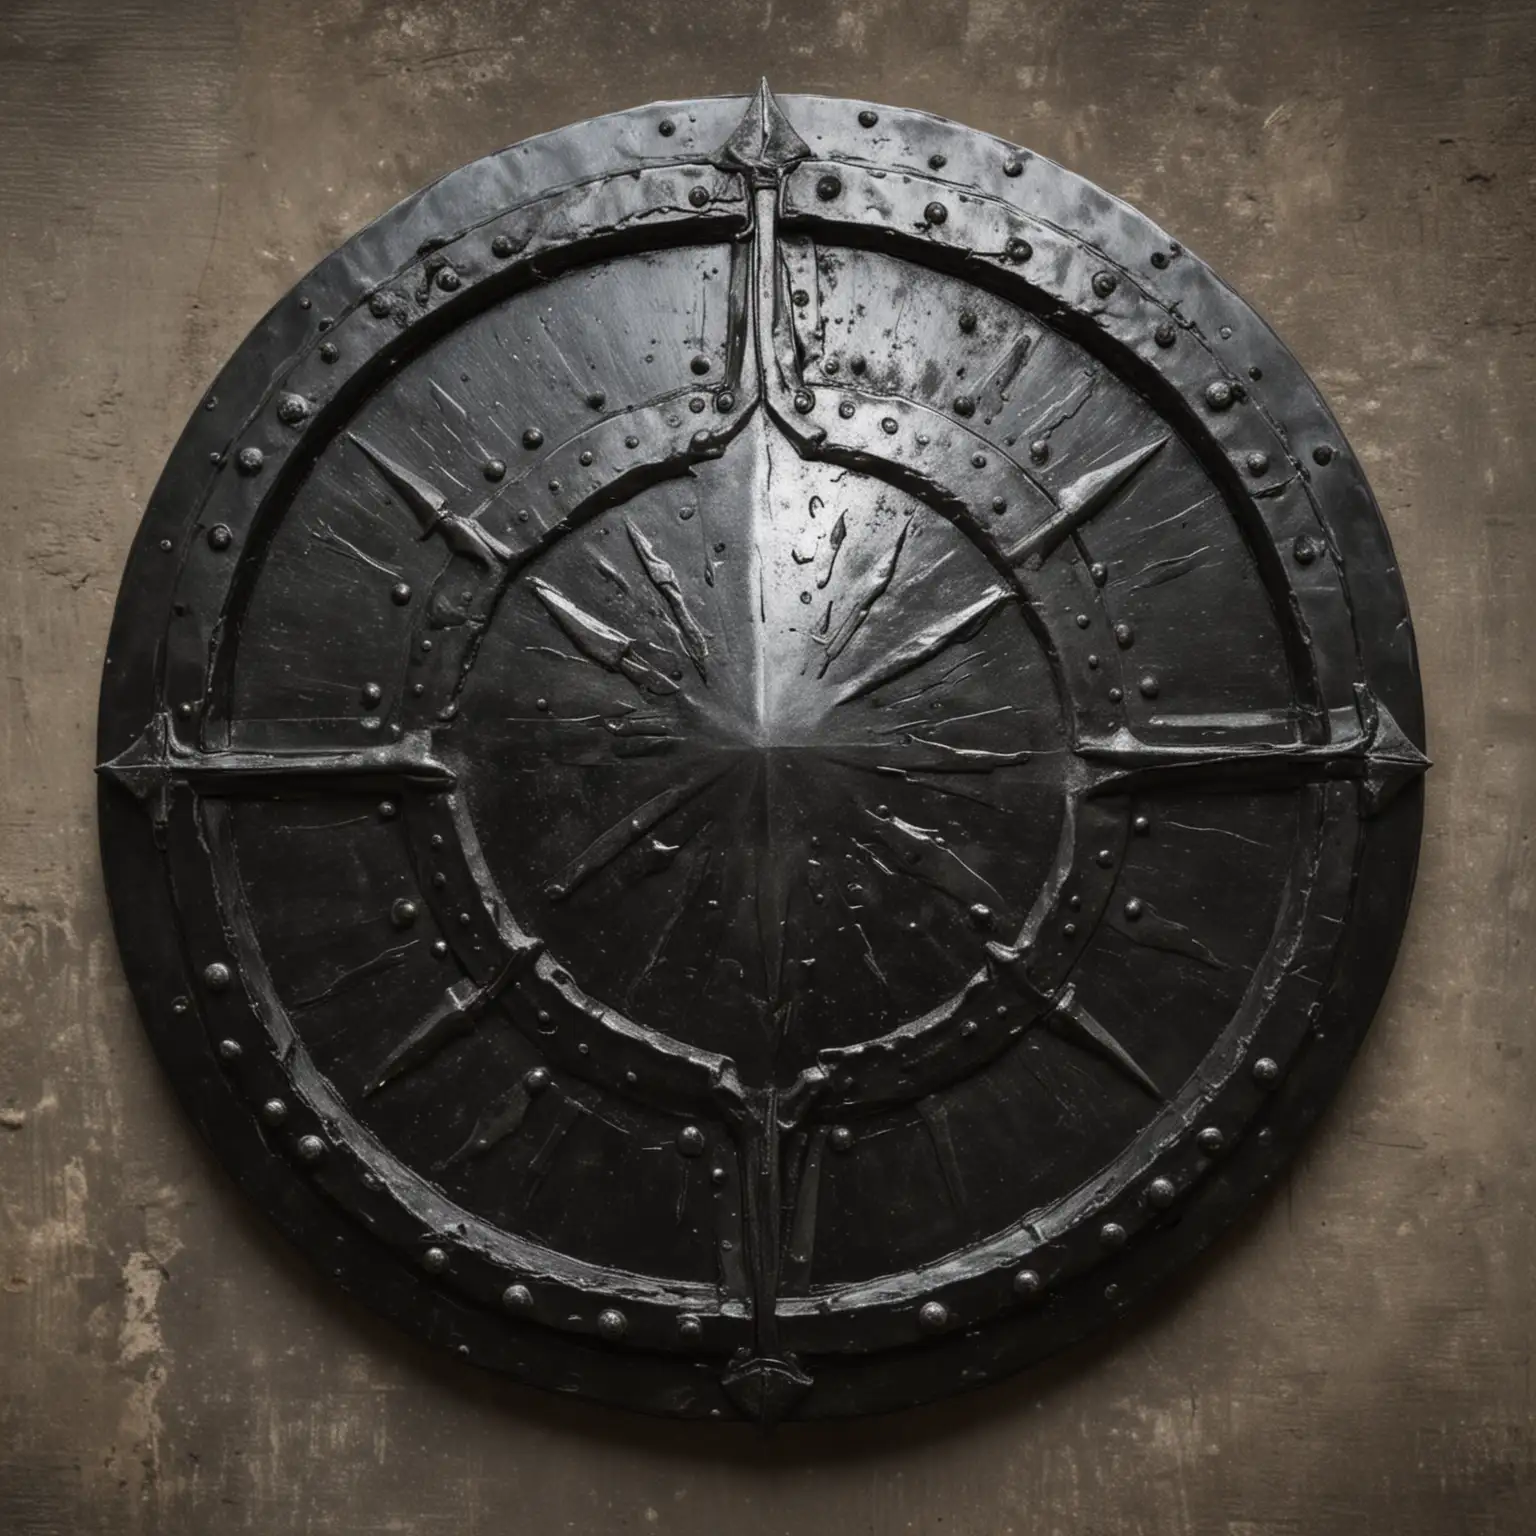 Circular ancient shield, rough metal, black gloss